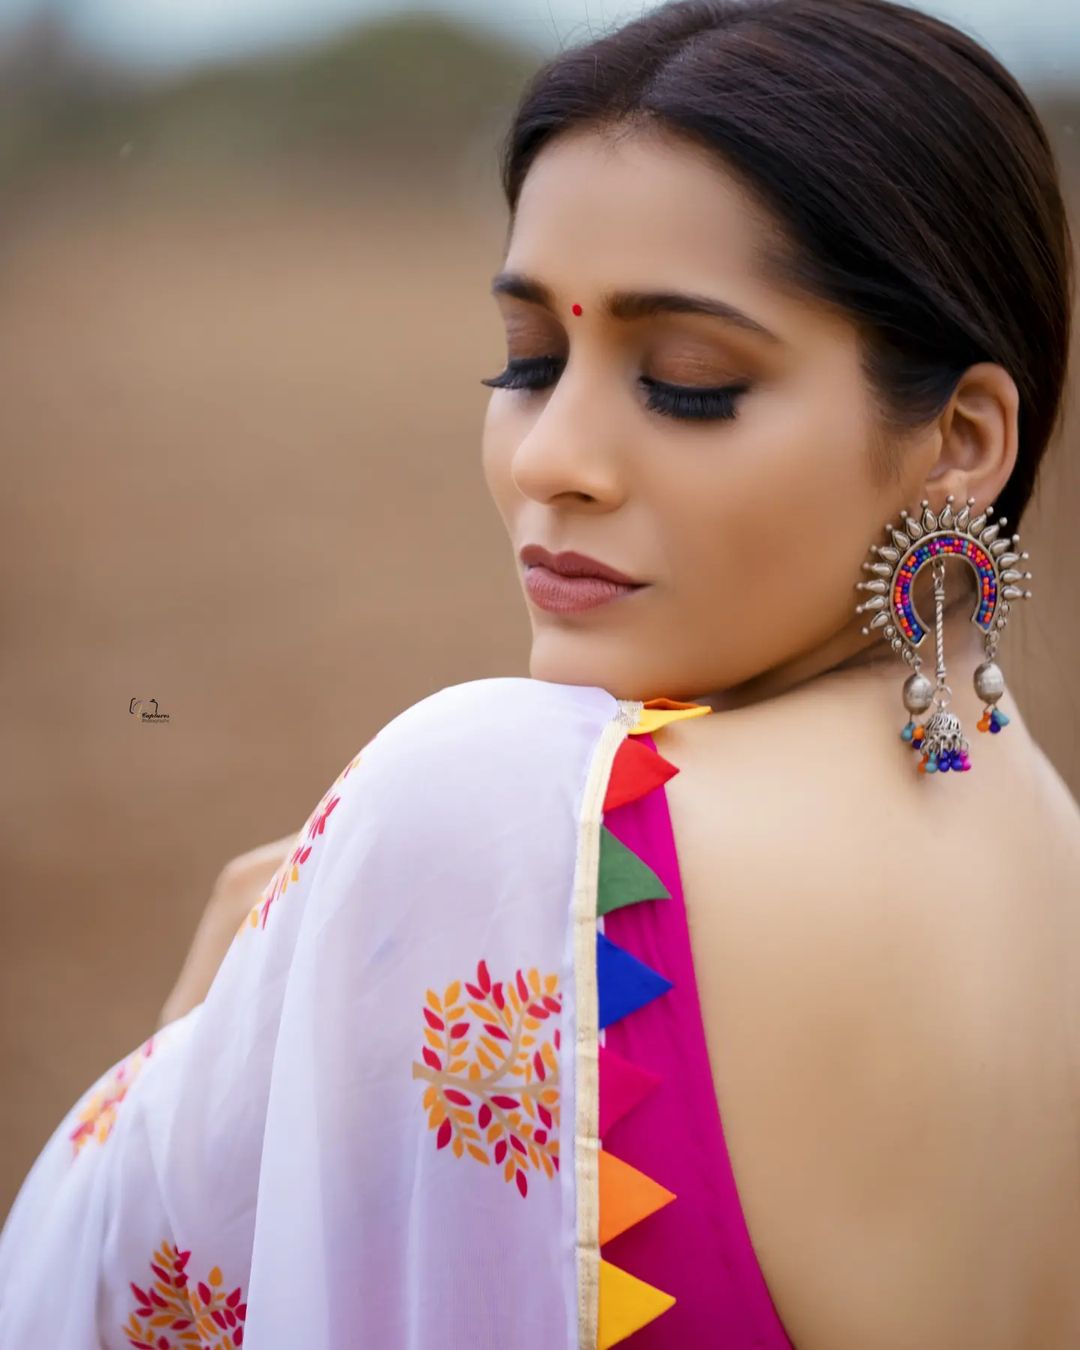 Rashmi Gautam Colorful Looks in White Saree